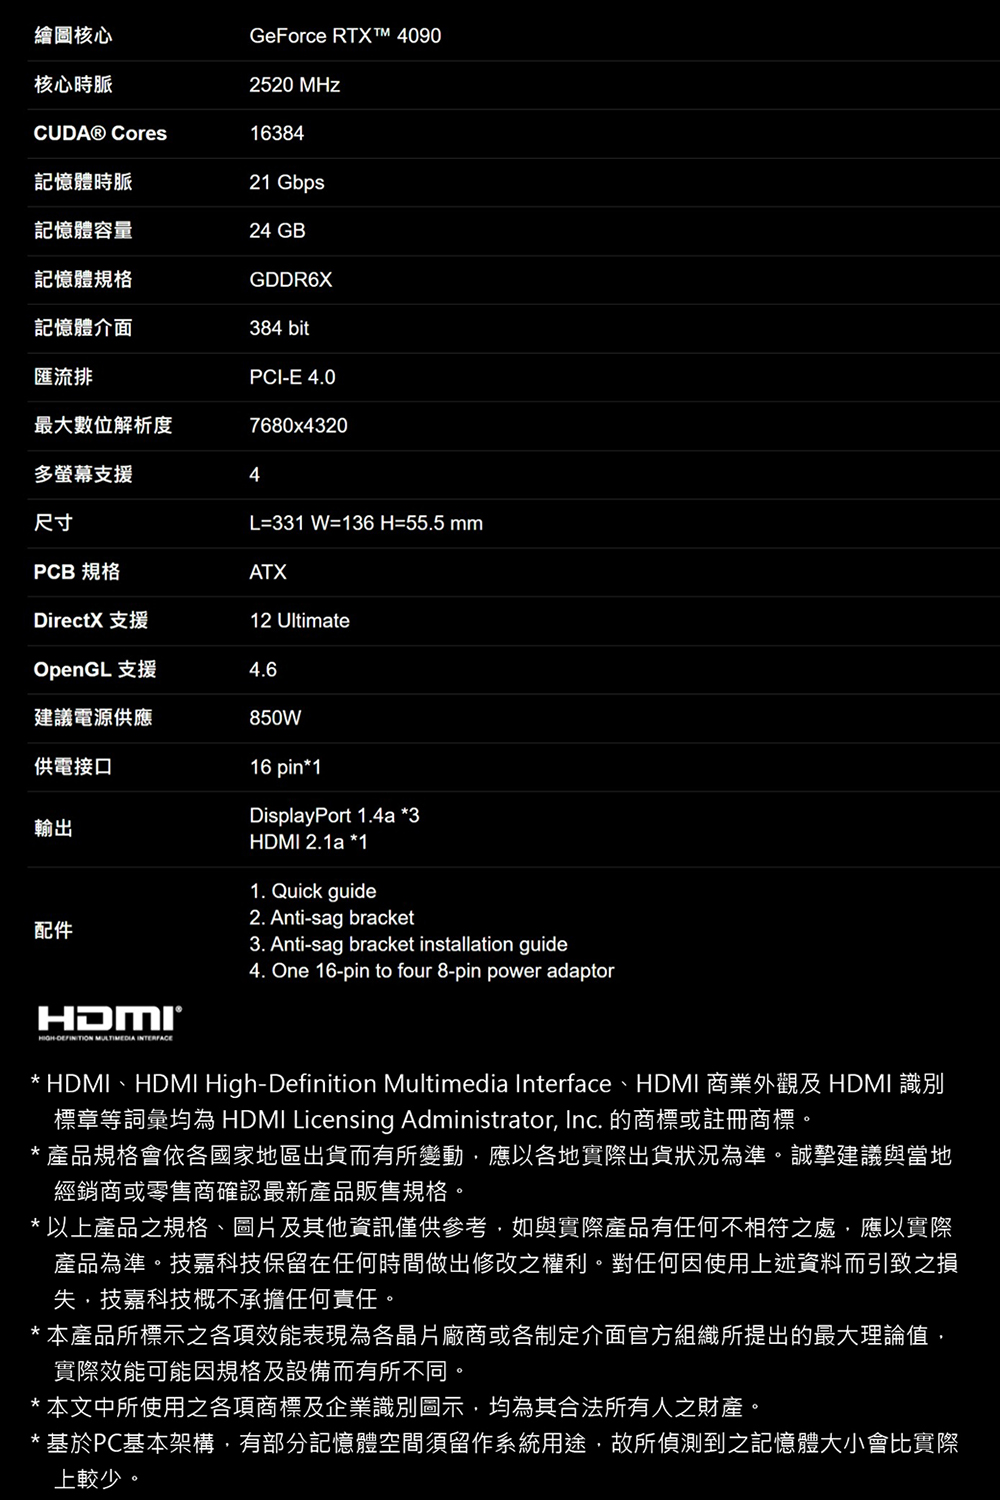 HDMI、 、HDMI HighDefinition Multimedia Interface、HDMI 商業外觀及 HDMI 識別